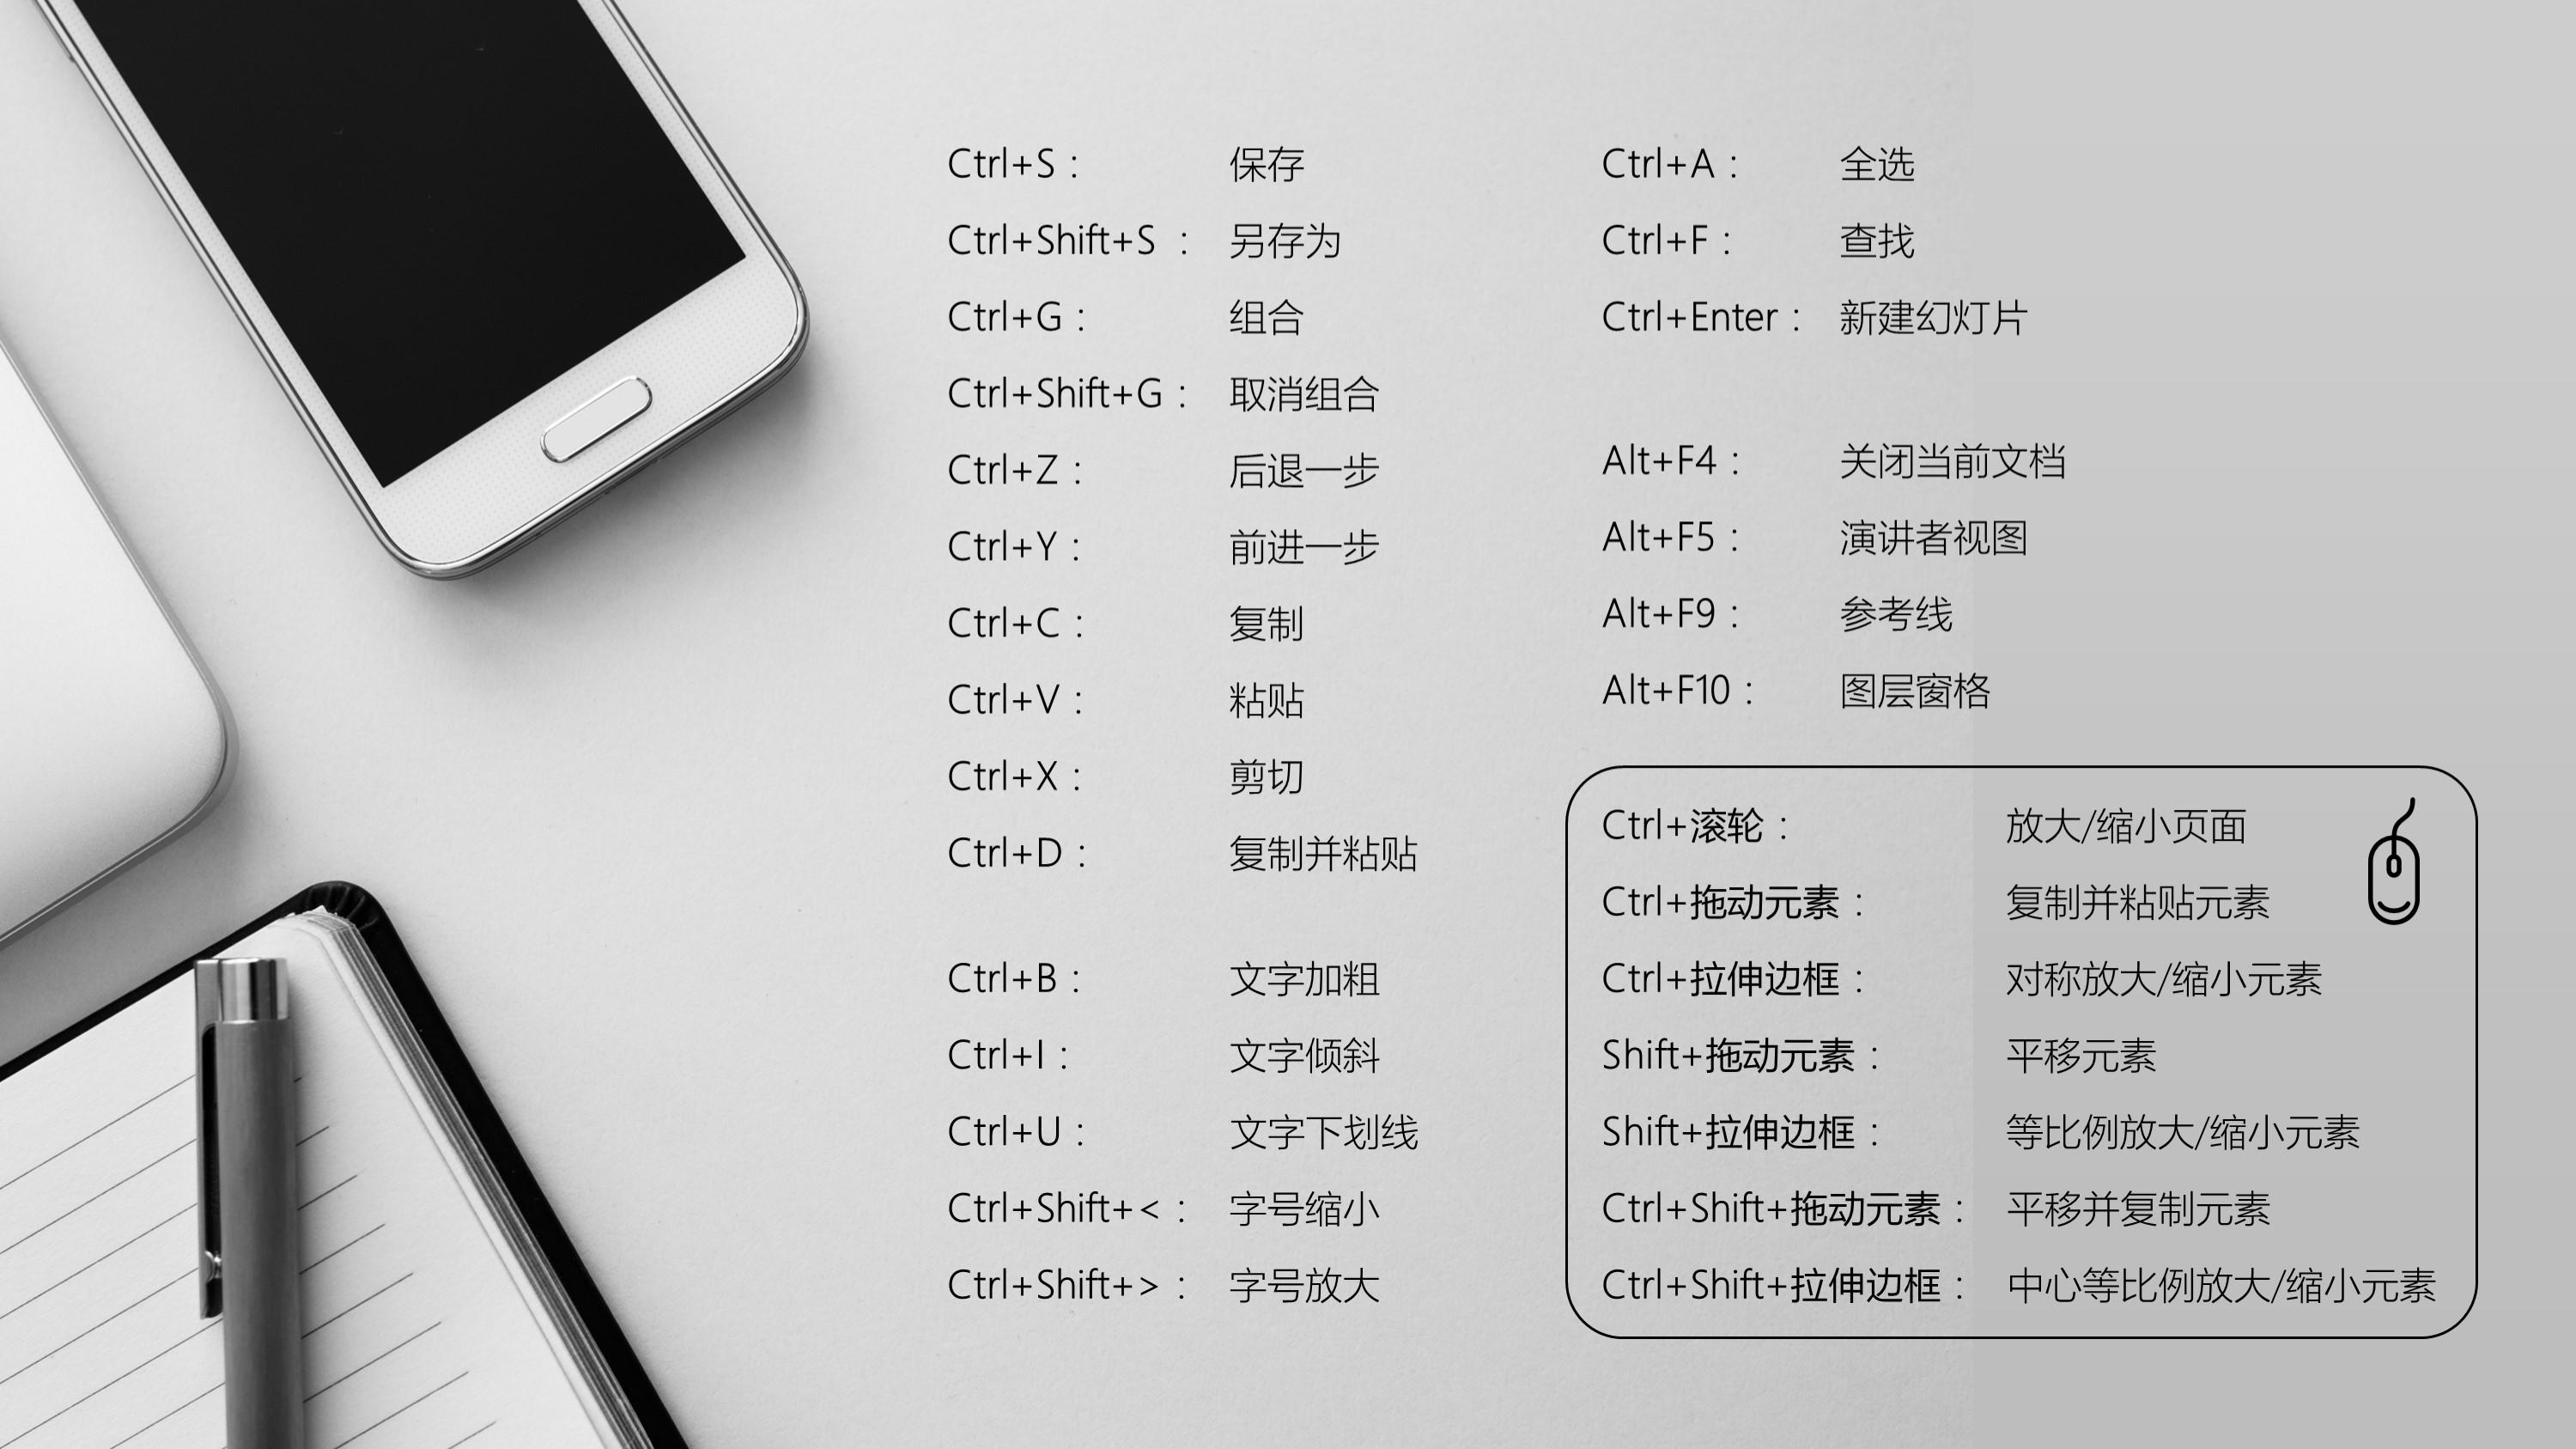 Adobe After Effects 2020 for Mac(ae 2020 汉化版) v17.1.5中文 - 哔哩哔哩